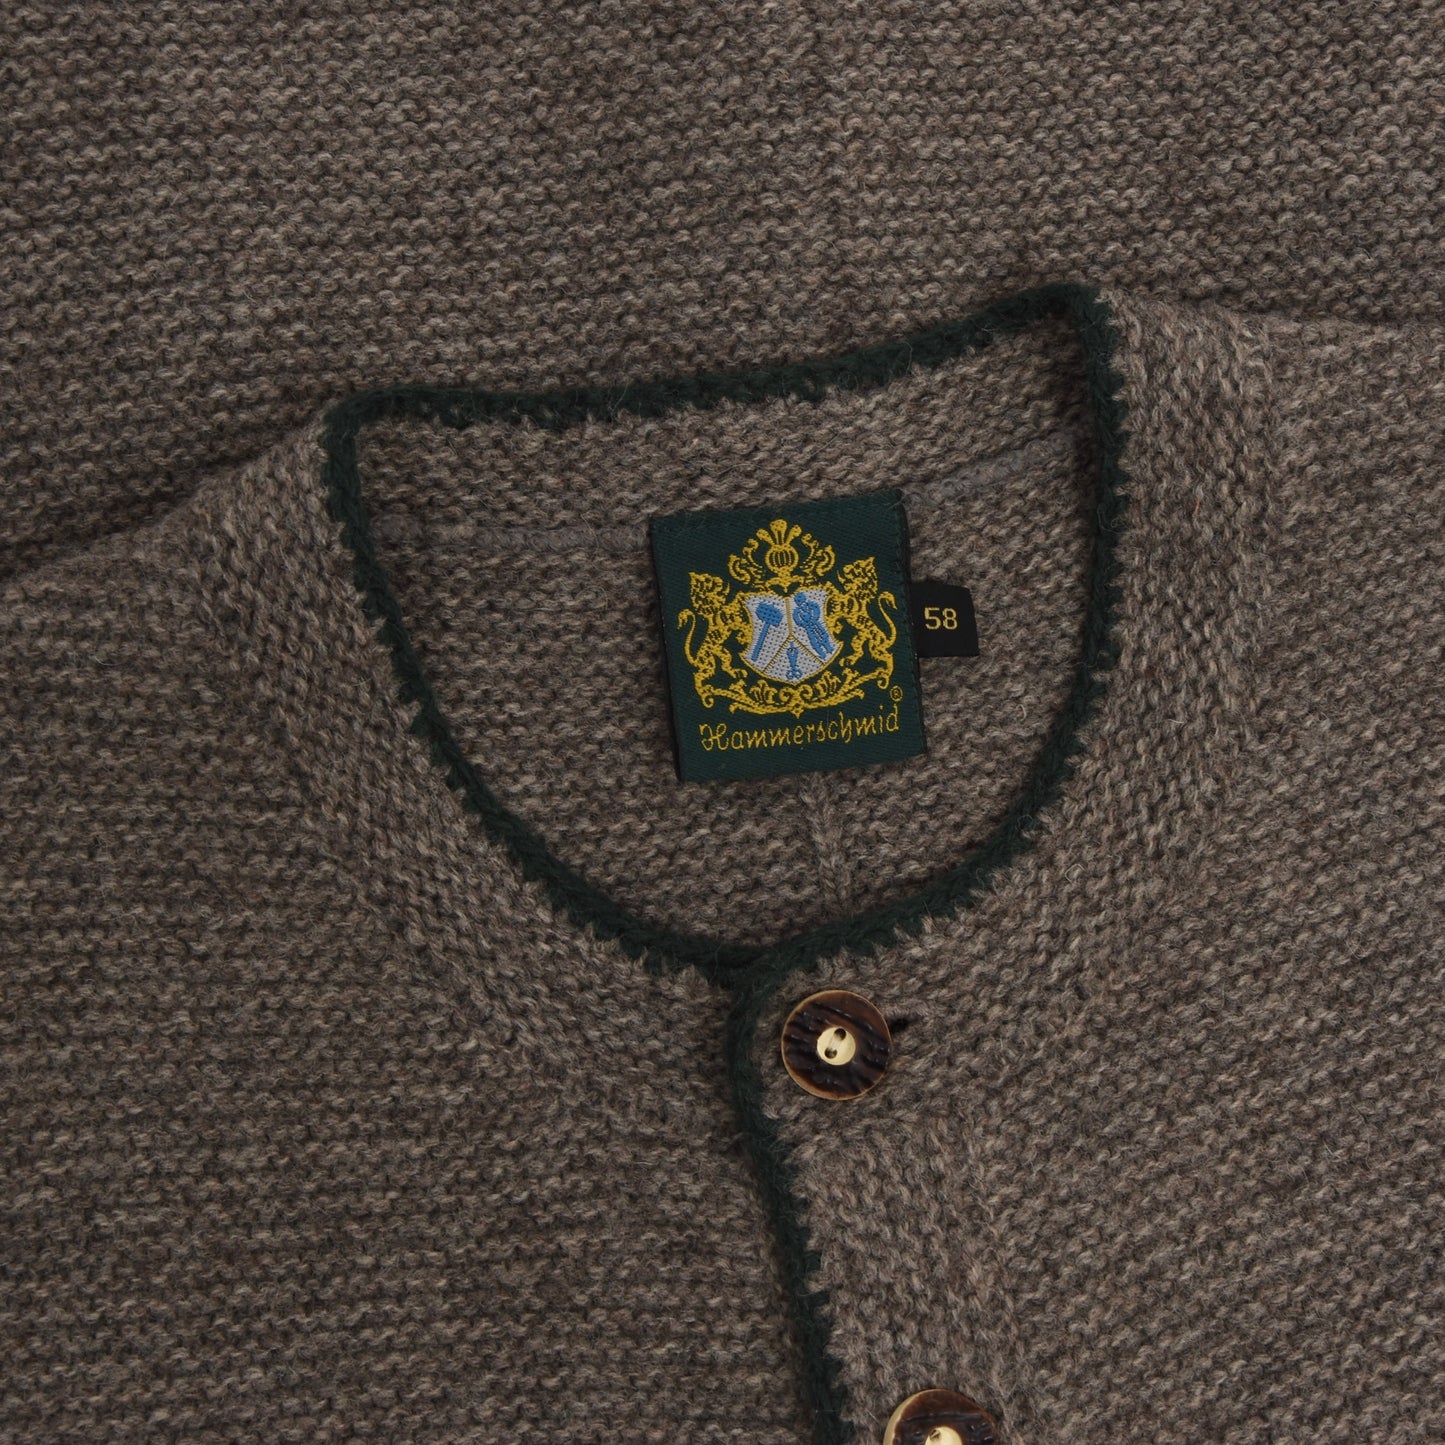 Hammerschmid Wool Sweater Vest/Trachtenweste Size 58 - Brown-Grey